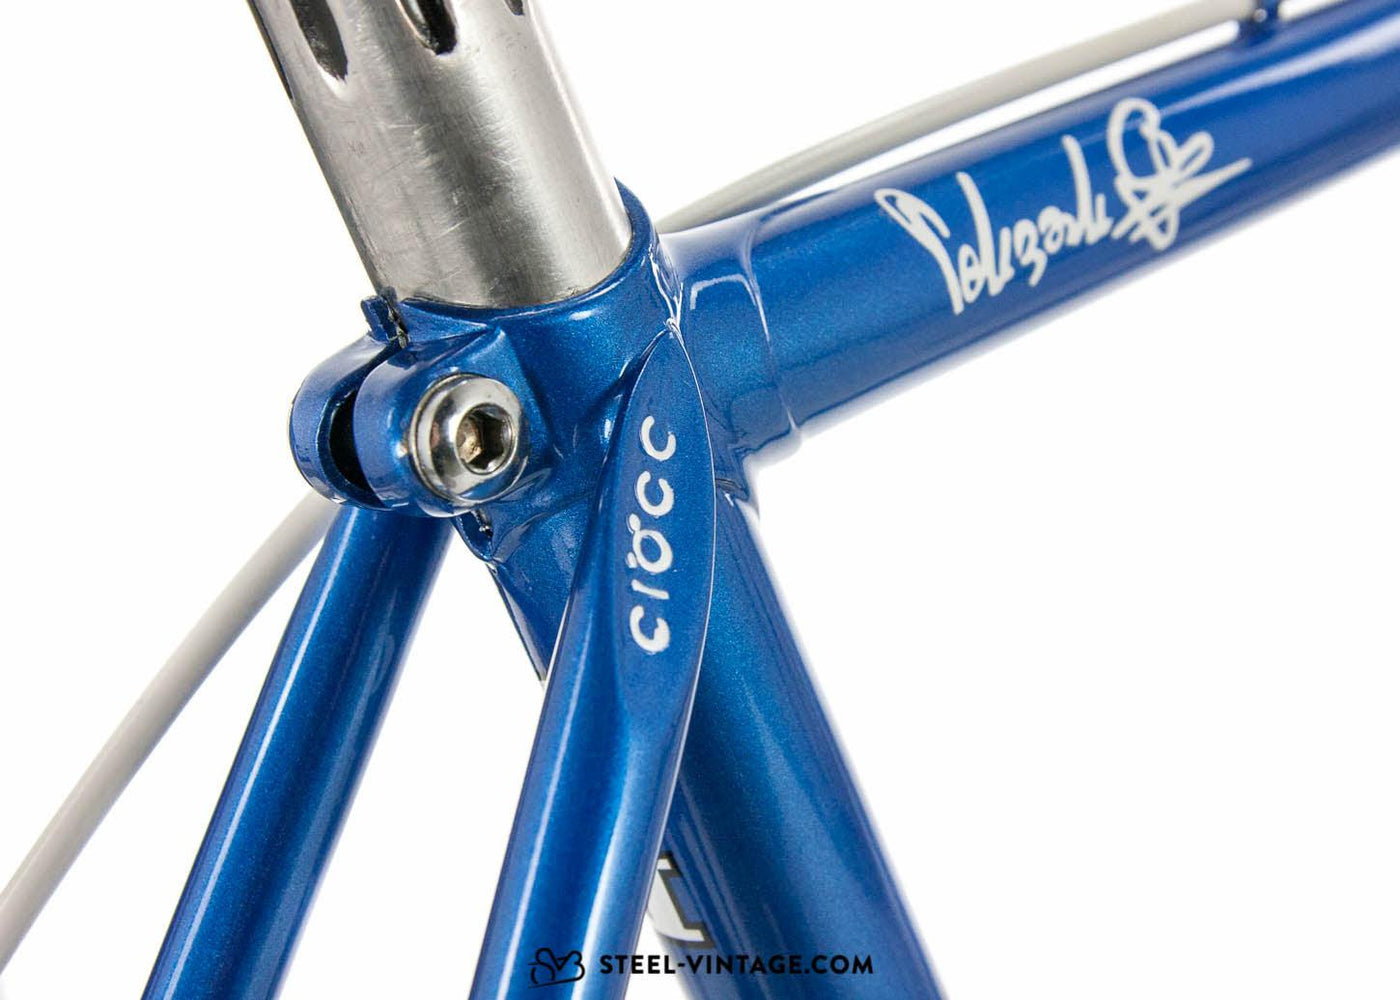 Ciöcc San Cristobal Classic Road Bike 1970s - Steel Vintage Bikes